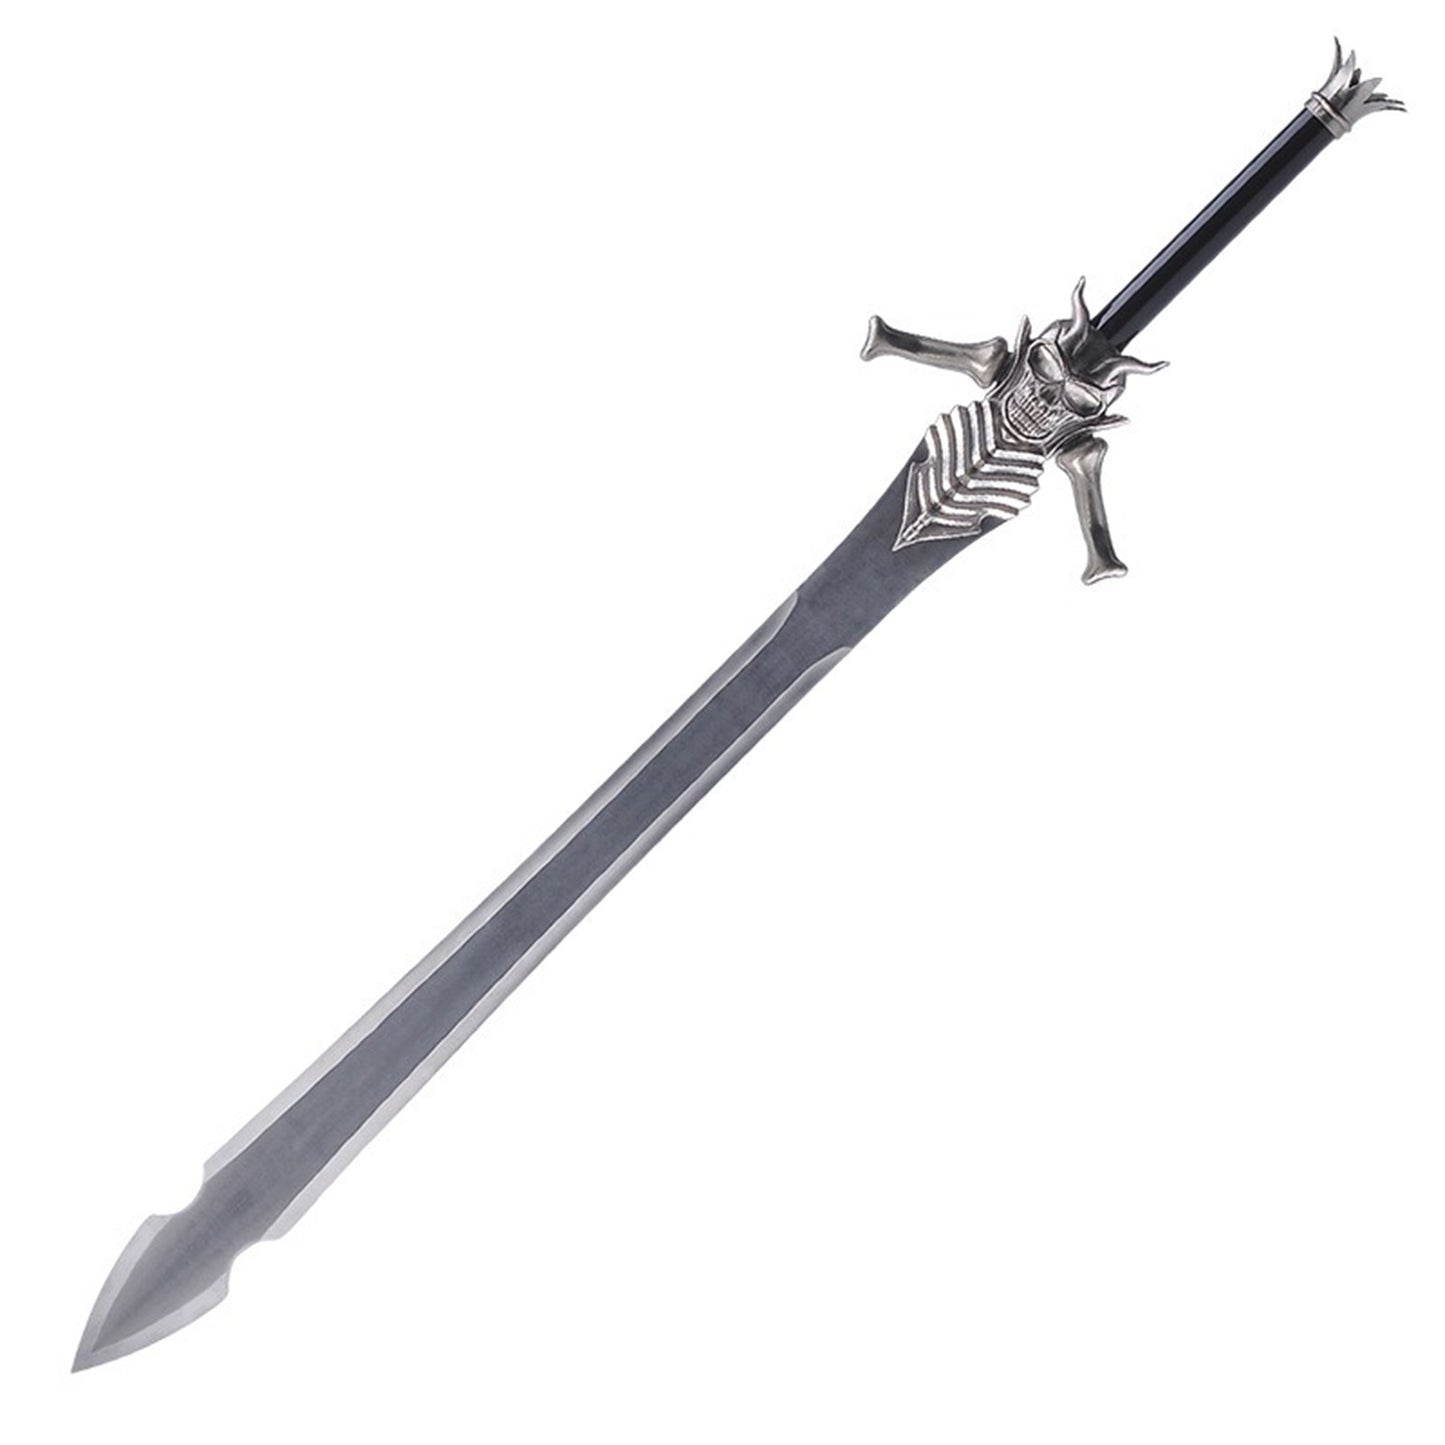 50" Dante Rebellion Sword Metal Replica Cosplay Prop